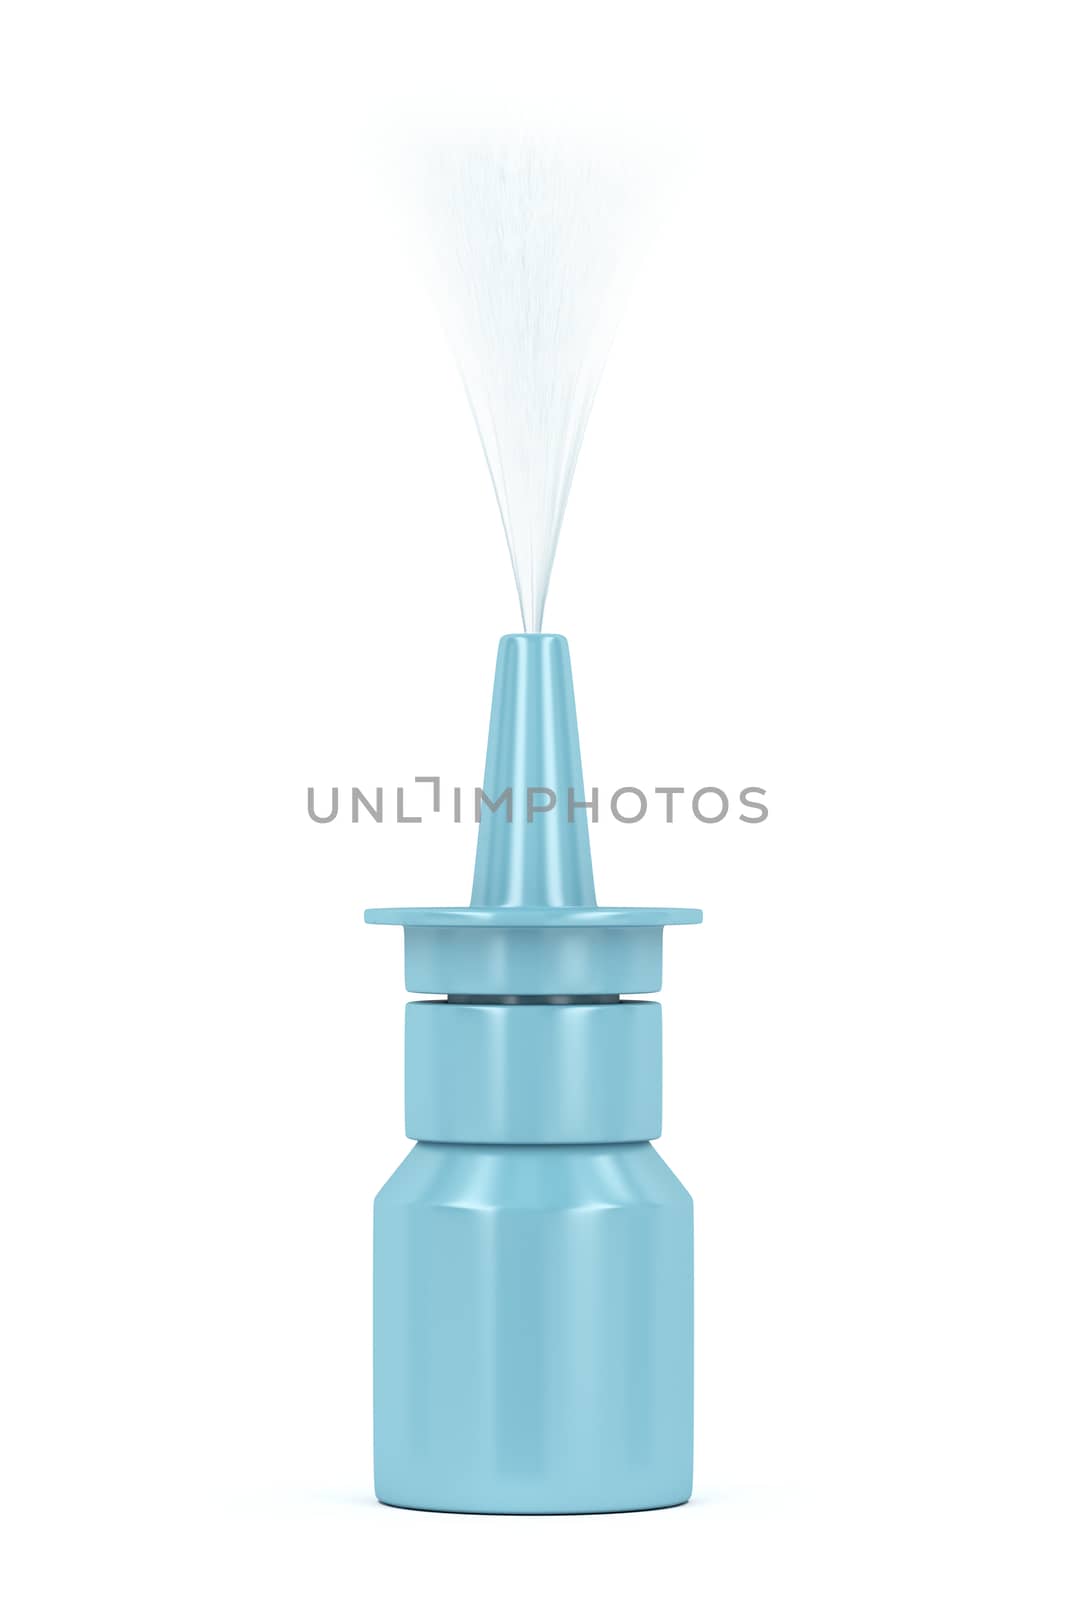 Spraying liquid from the blue nasal spray bottle